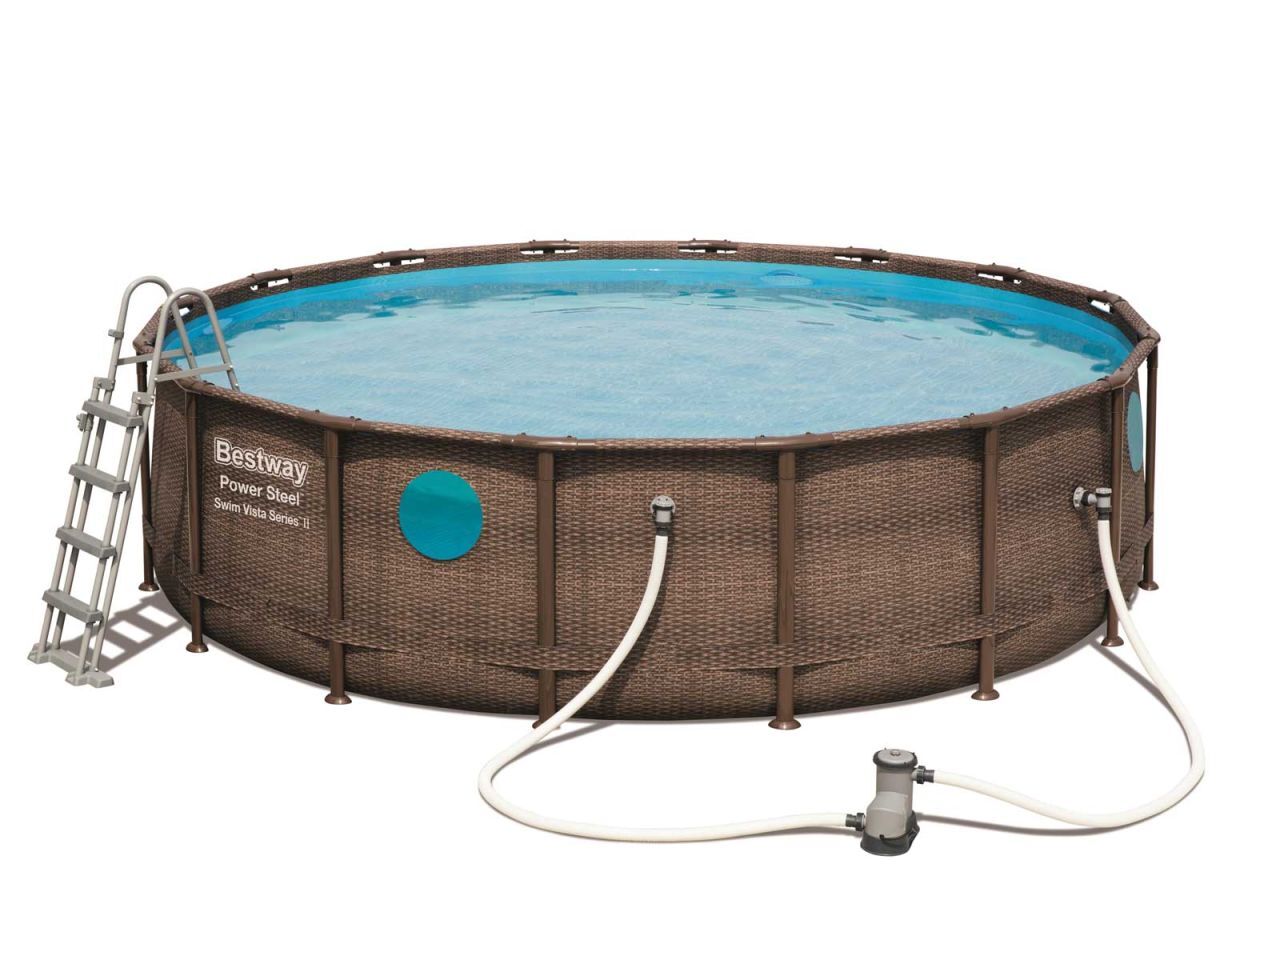 Höfer Chemie Power Steel™ Swim Vista Series™ Frame Pool Set 488 cm x 122 cm